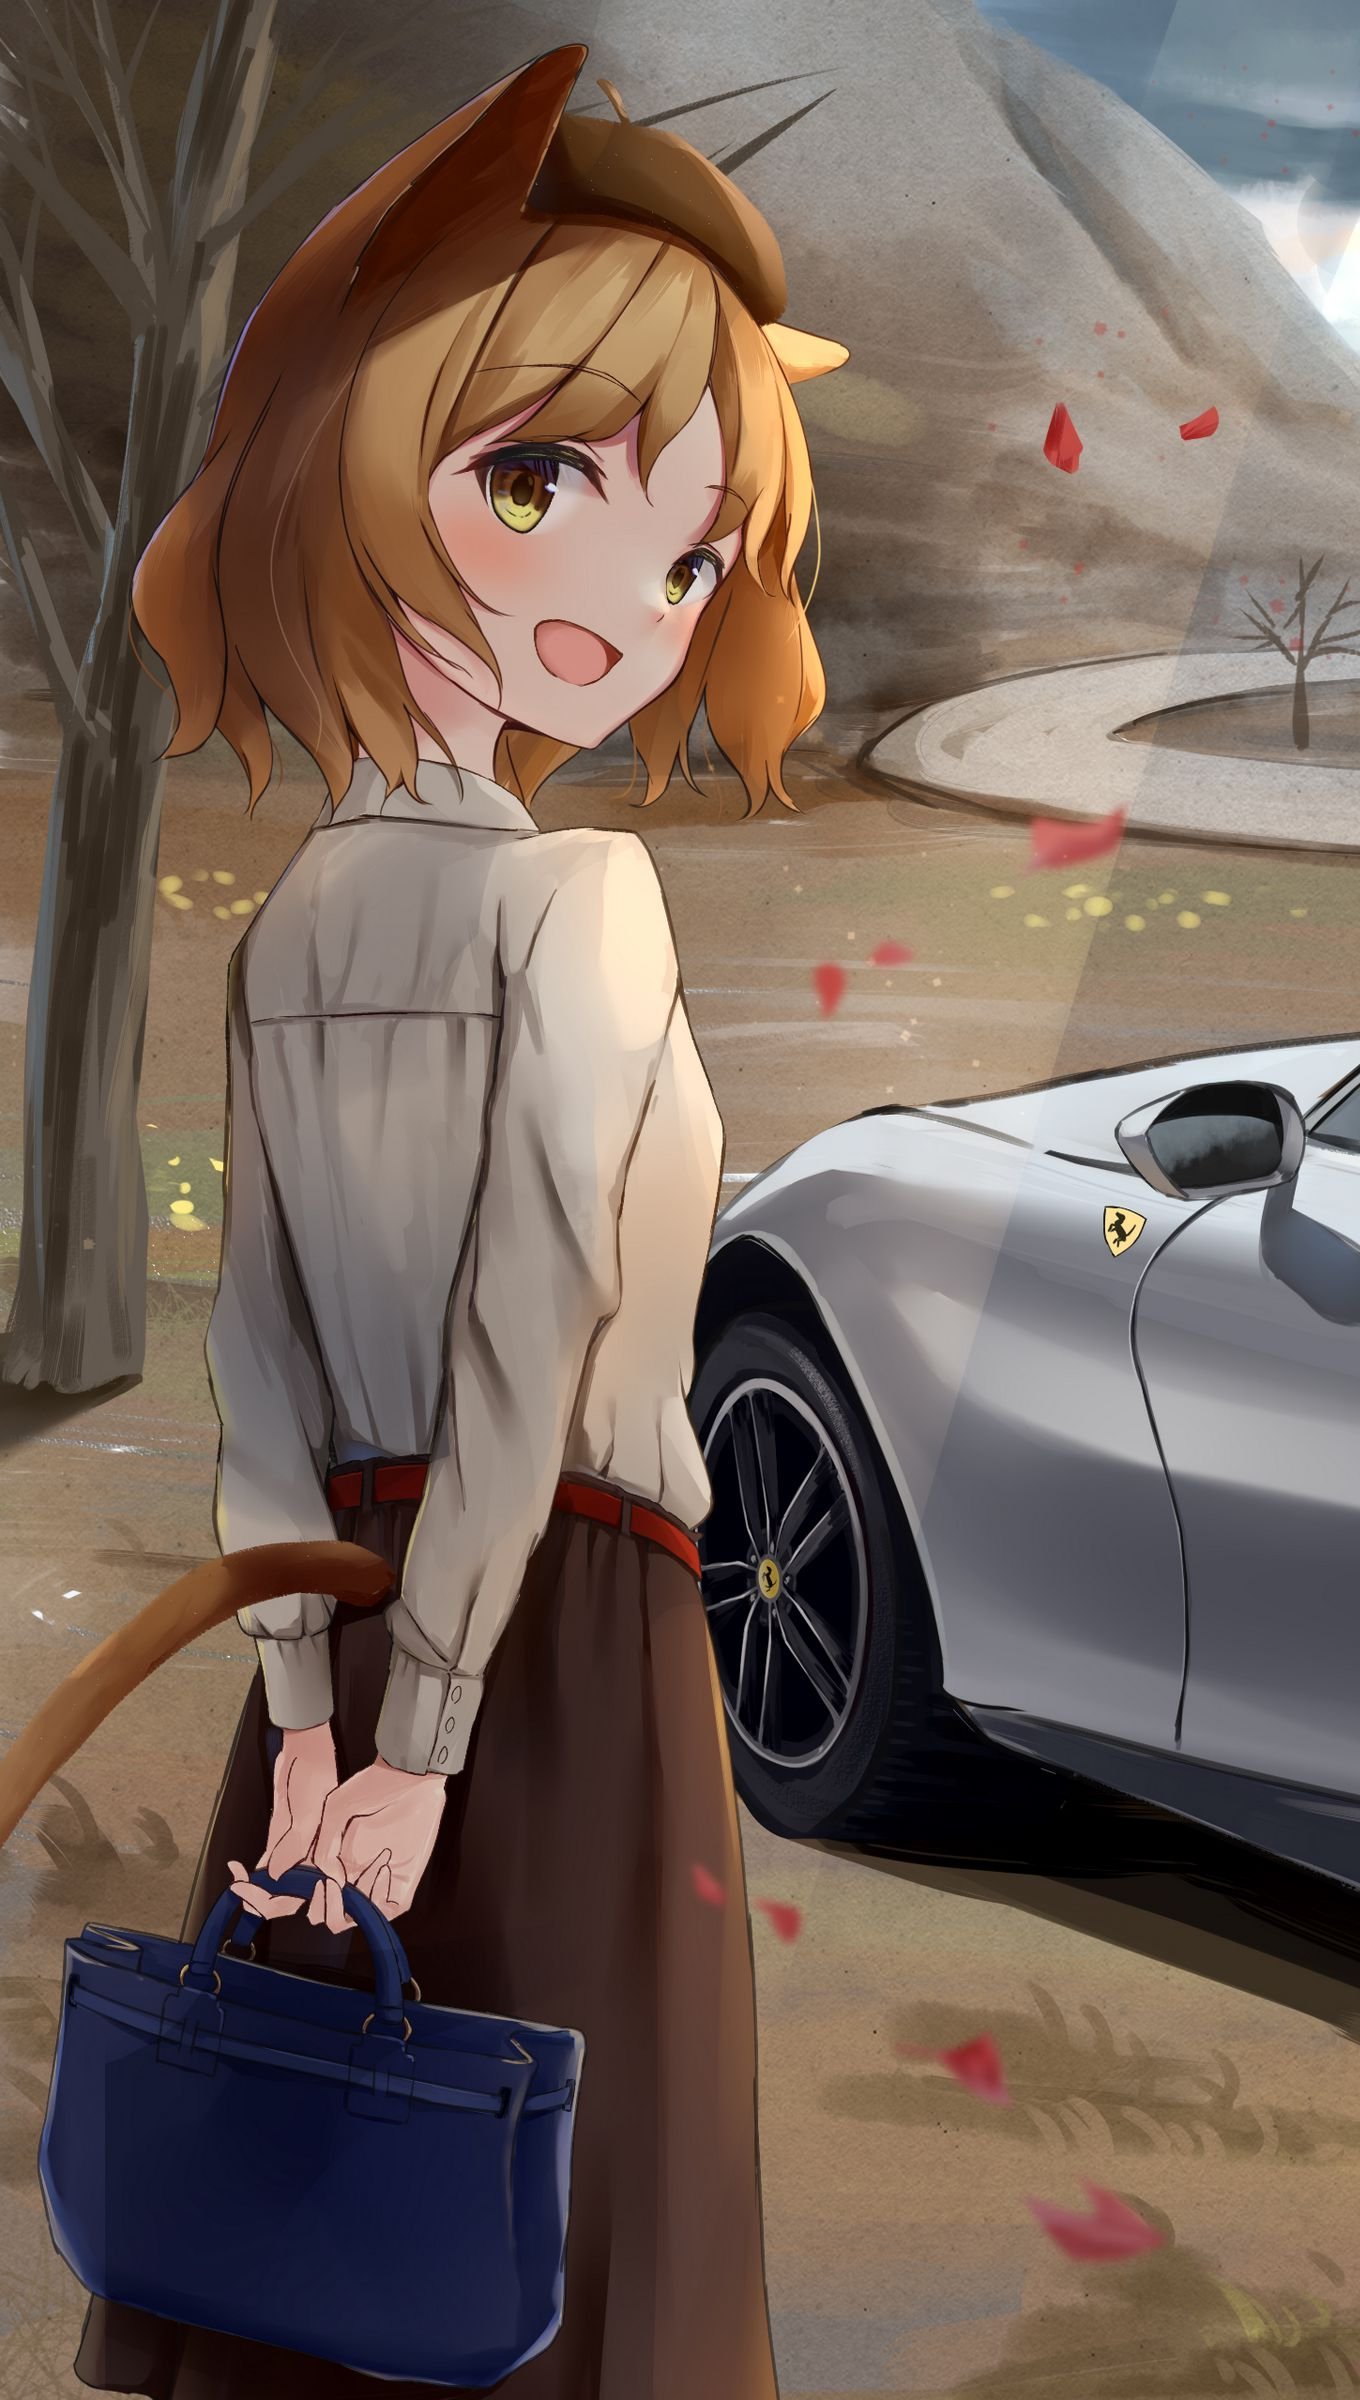 Neko girl with car Anime Wallpaper 4k Ultra HD ID:9473